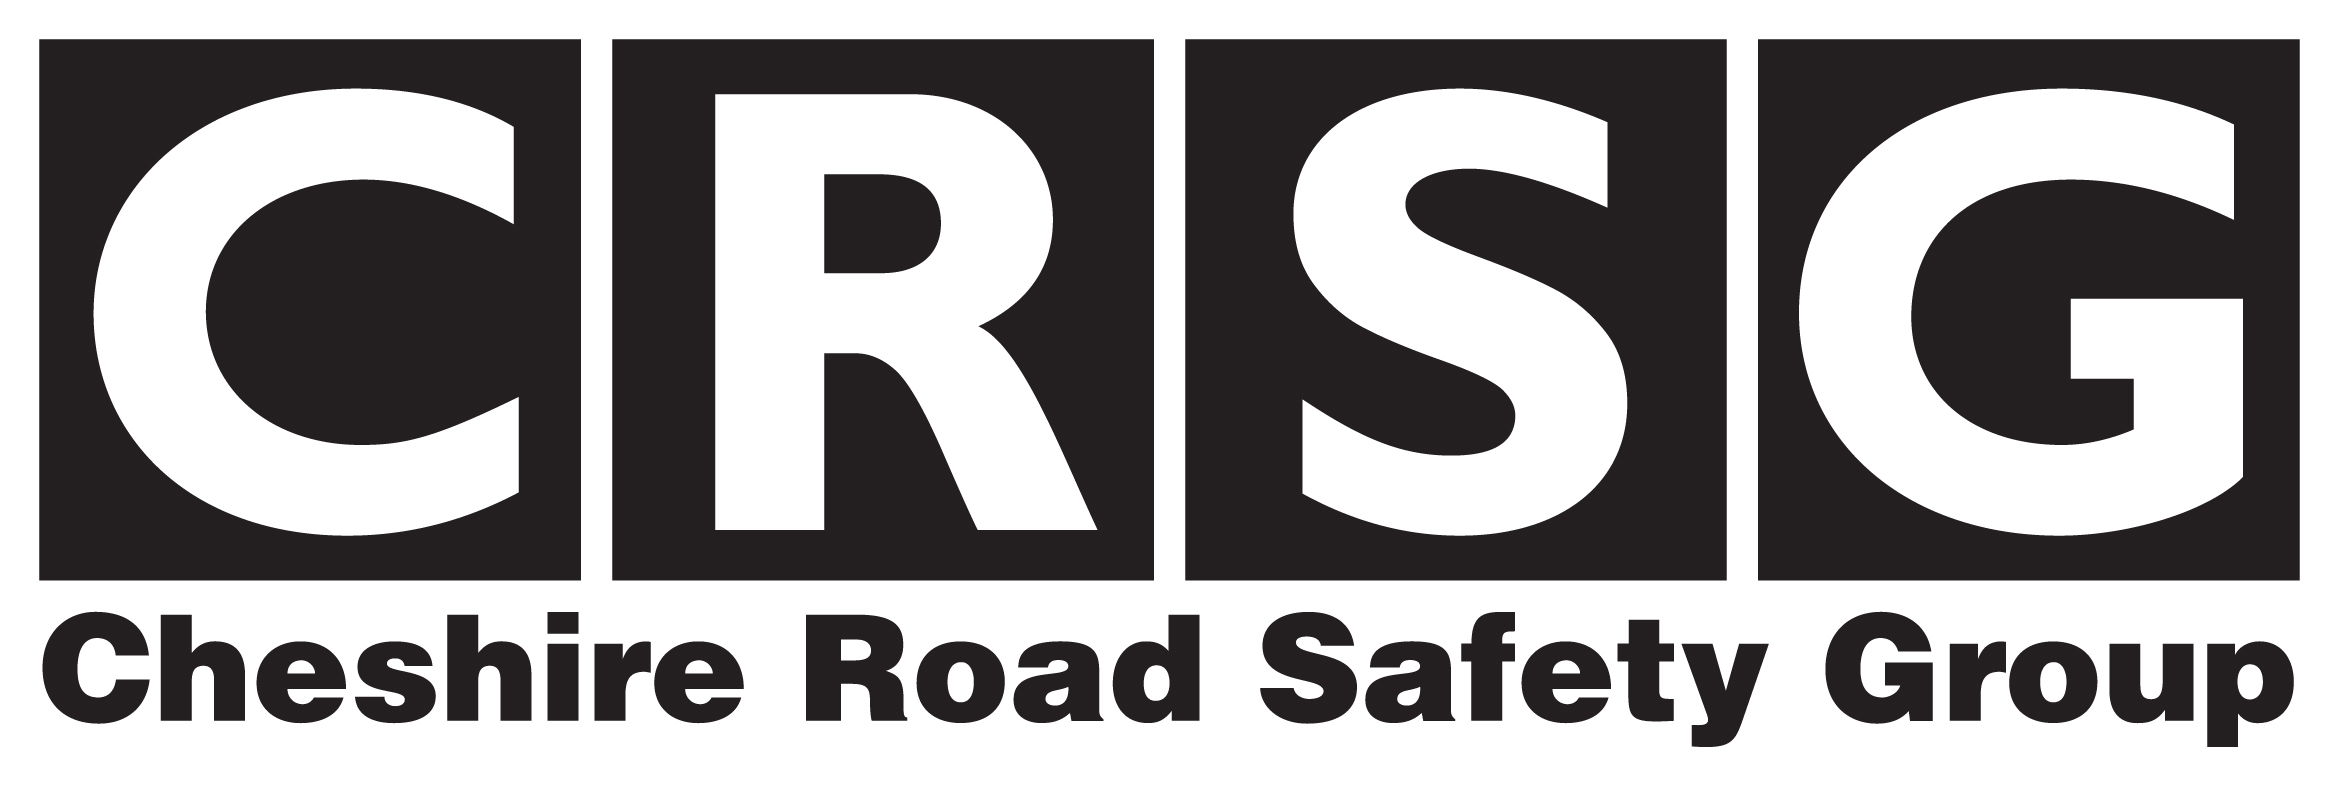 CRSG logo